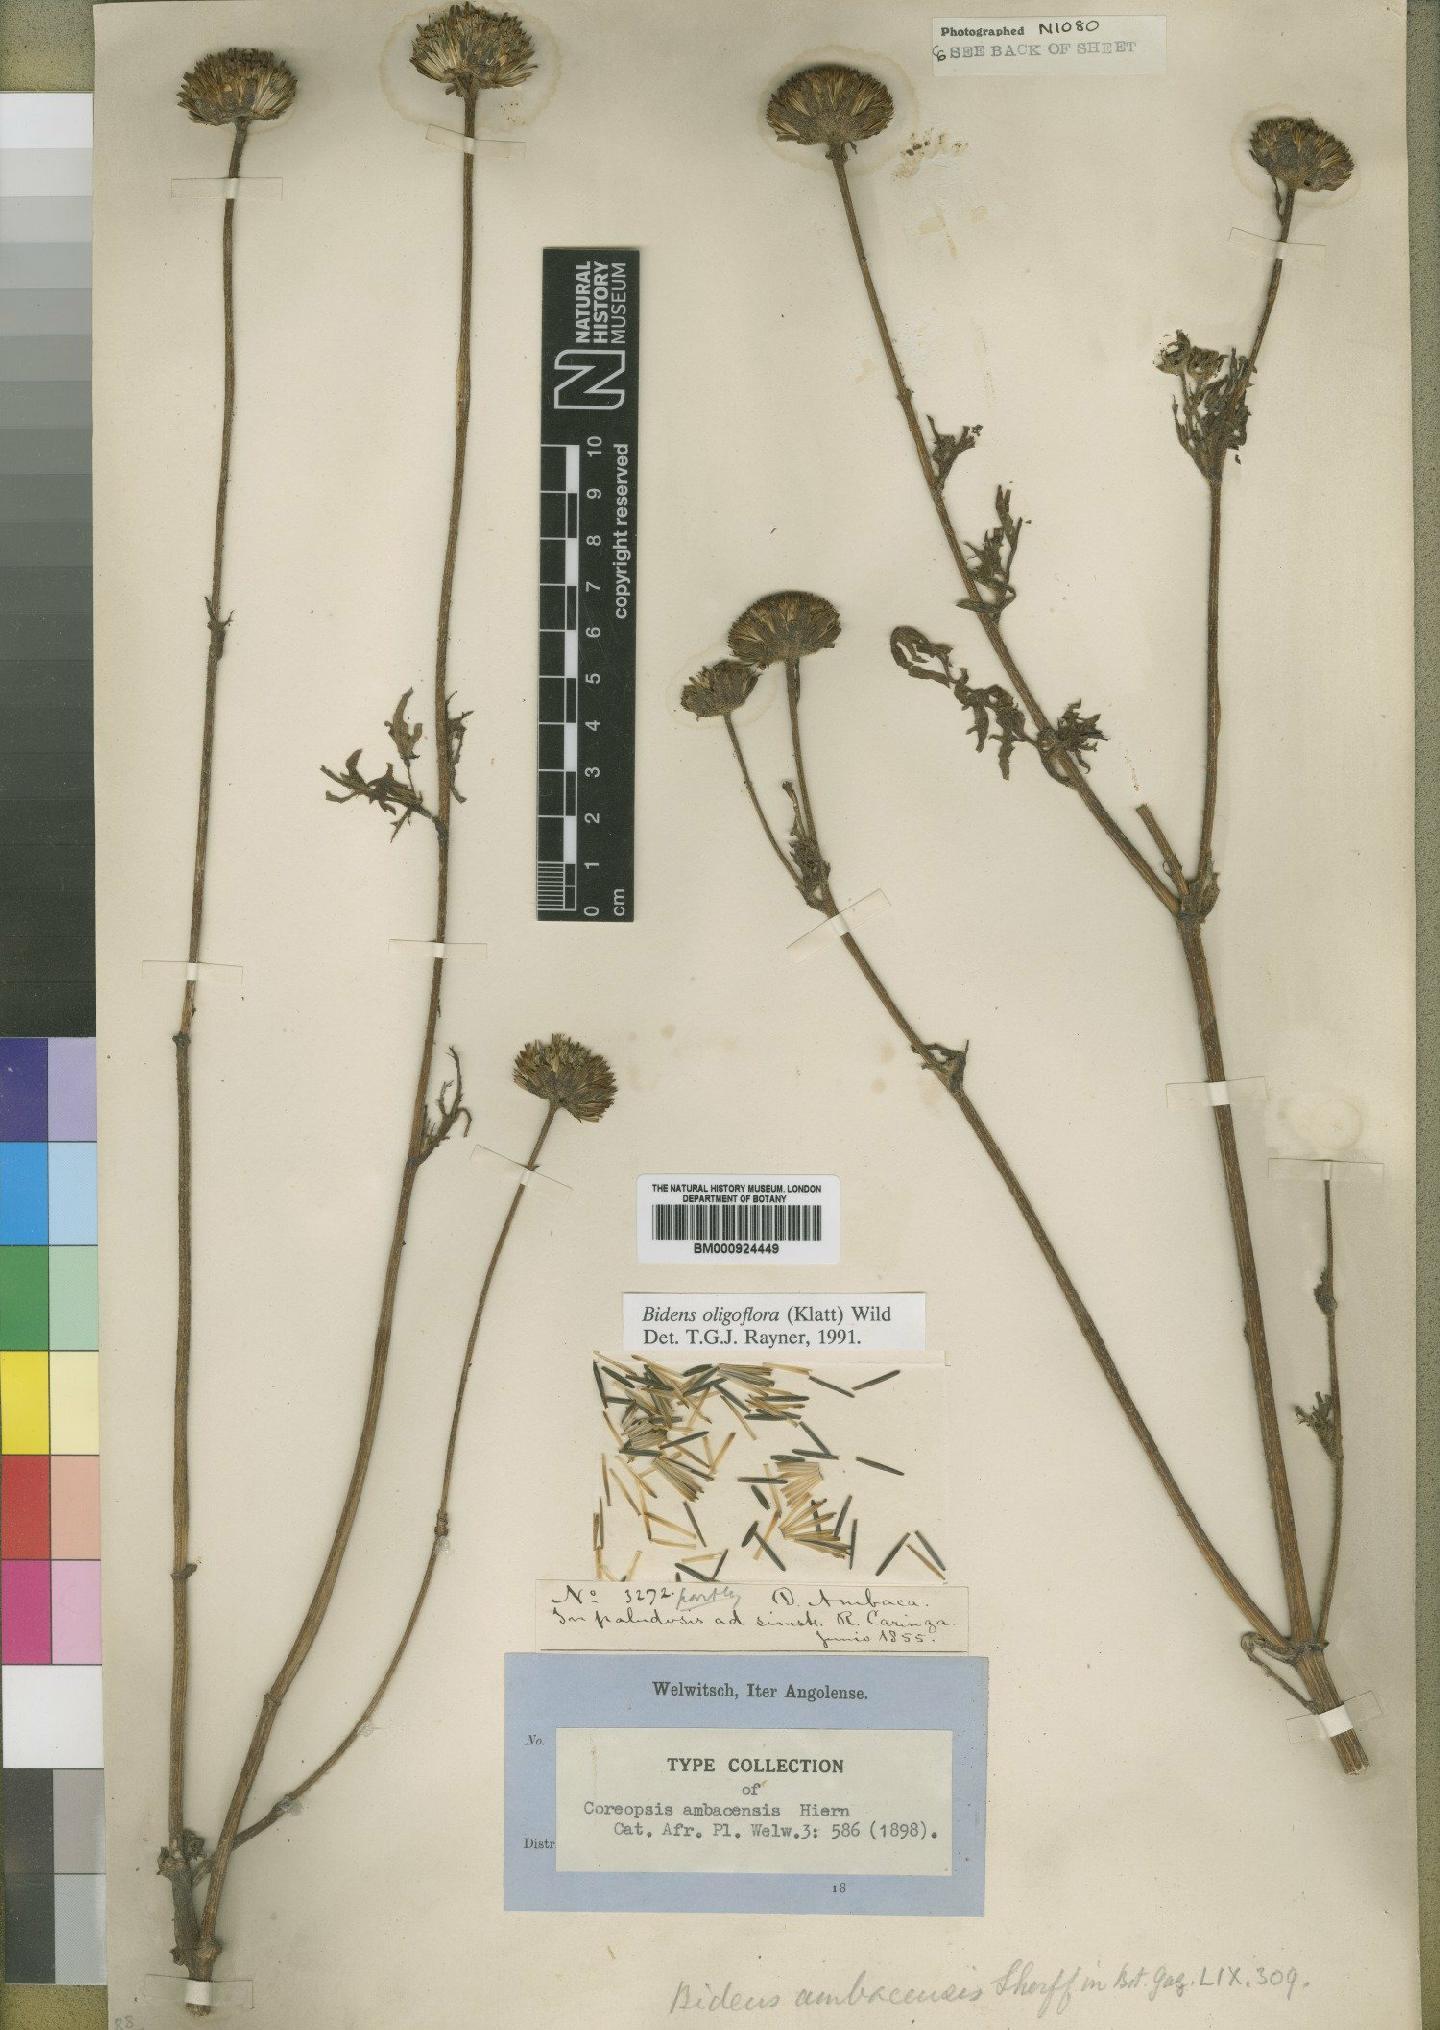 To NHMUK collection (Bidens oligoflora (Klatt) Wild; Type; NHMUK:ecatalogue:4529477)